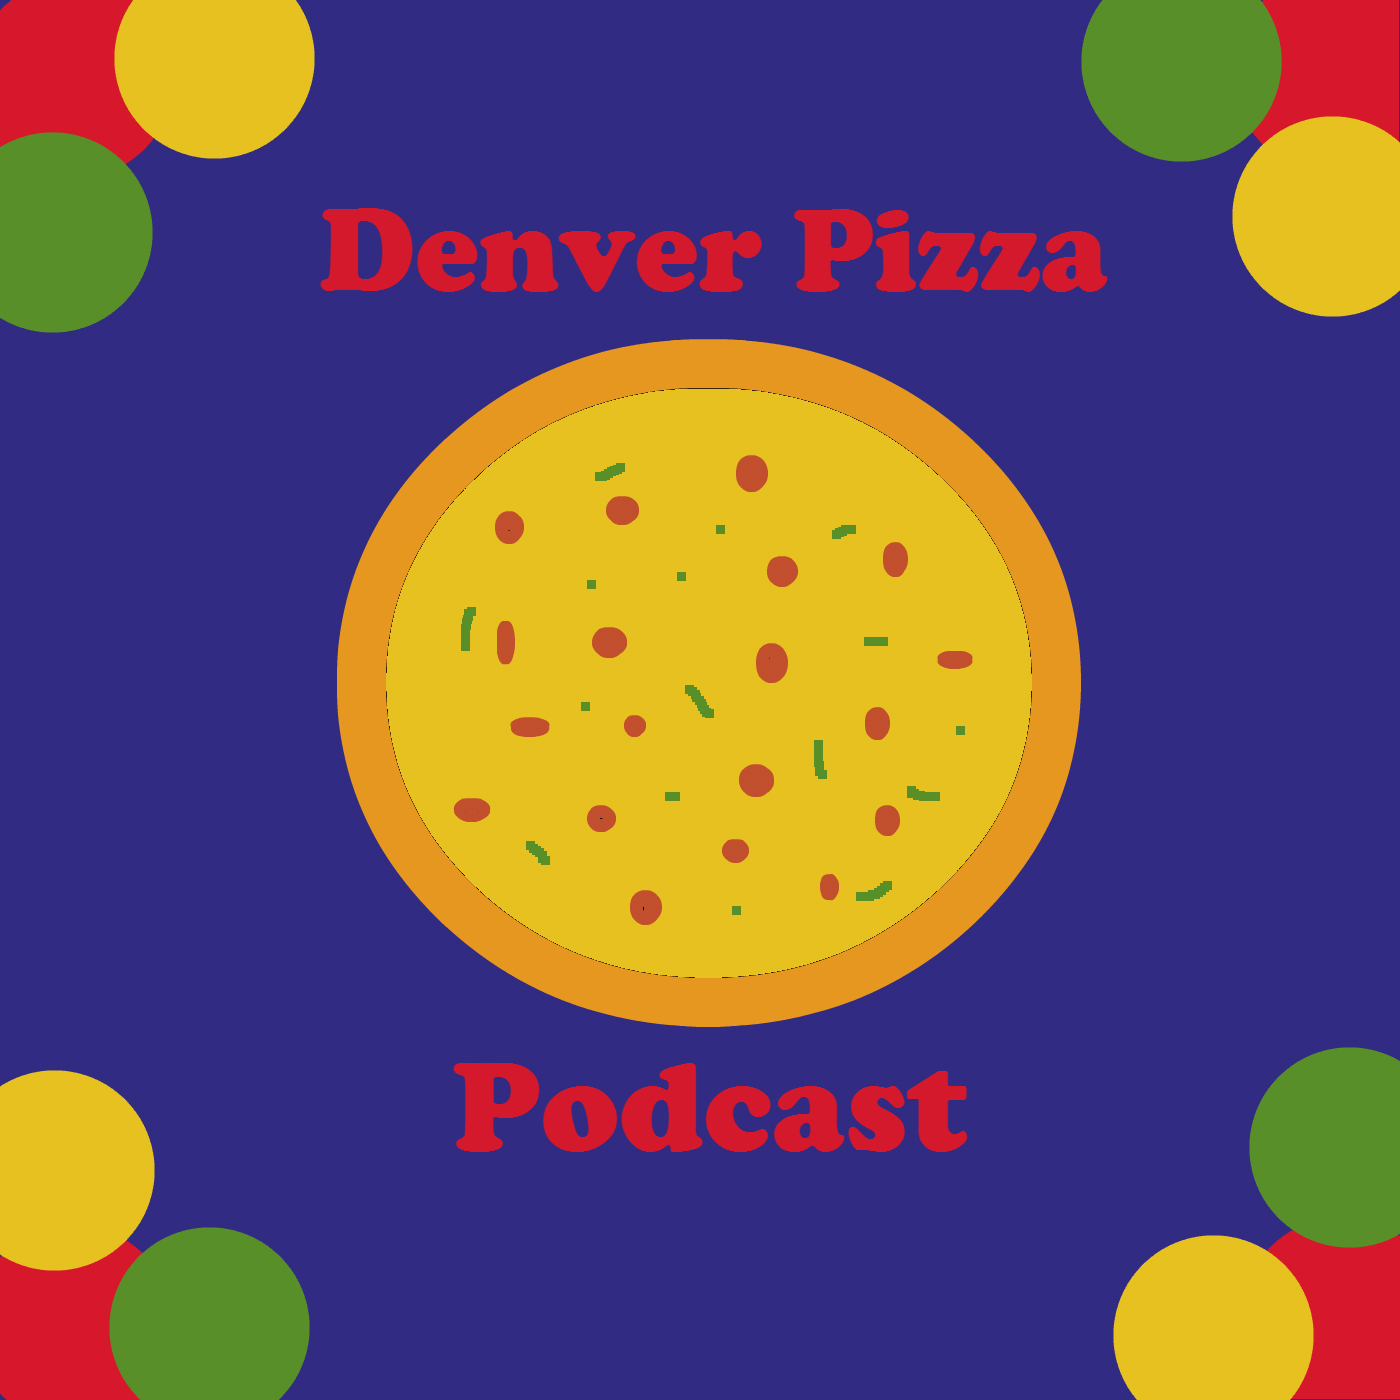 The Denver Pizza Podcast